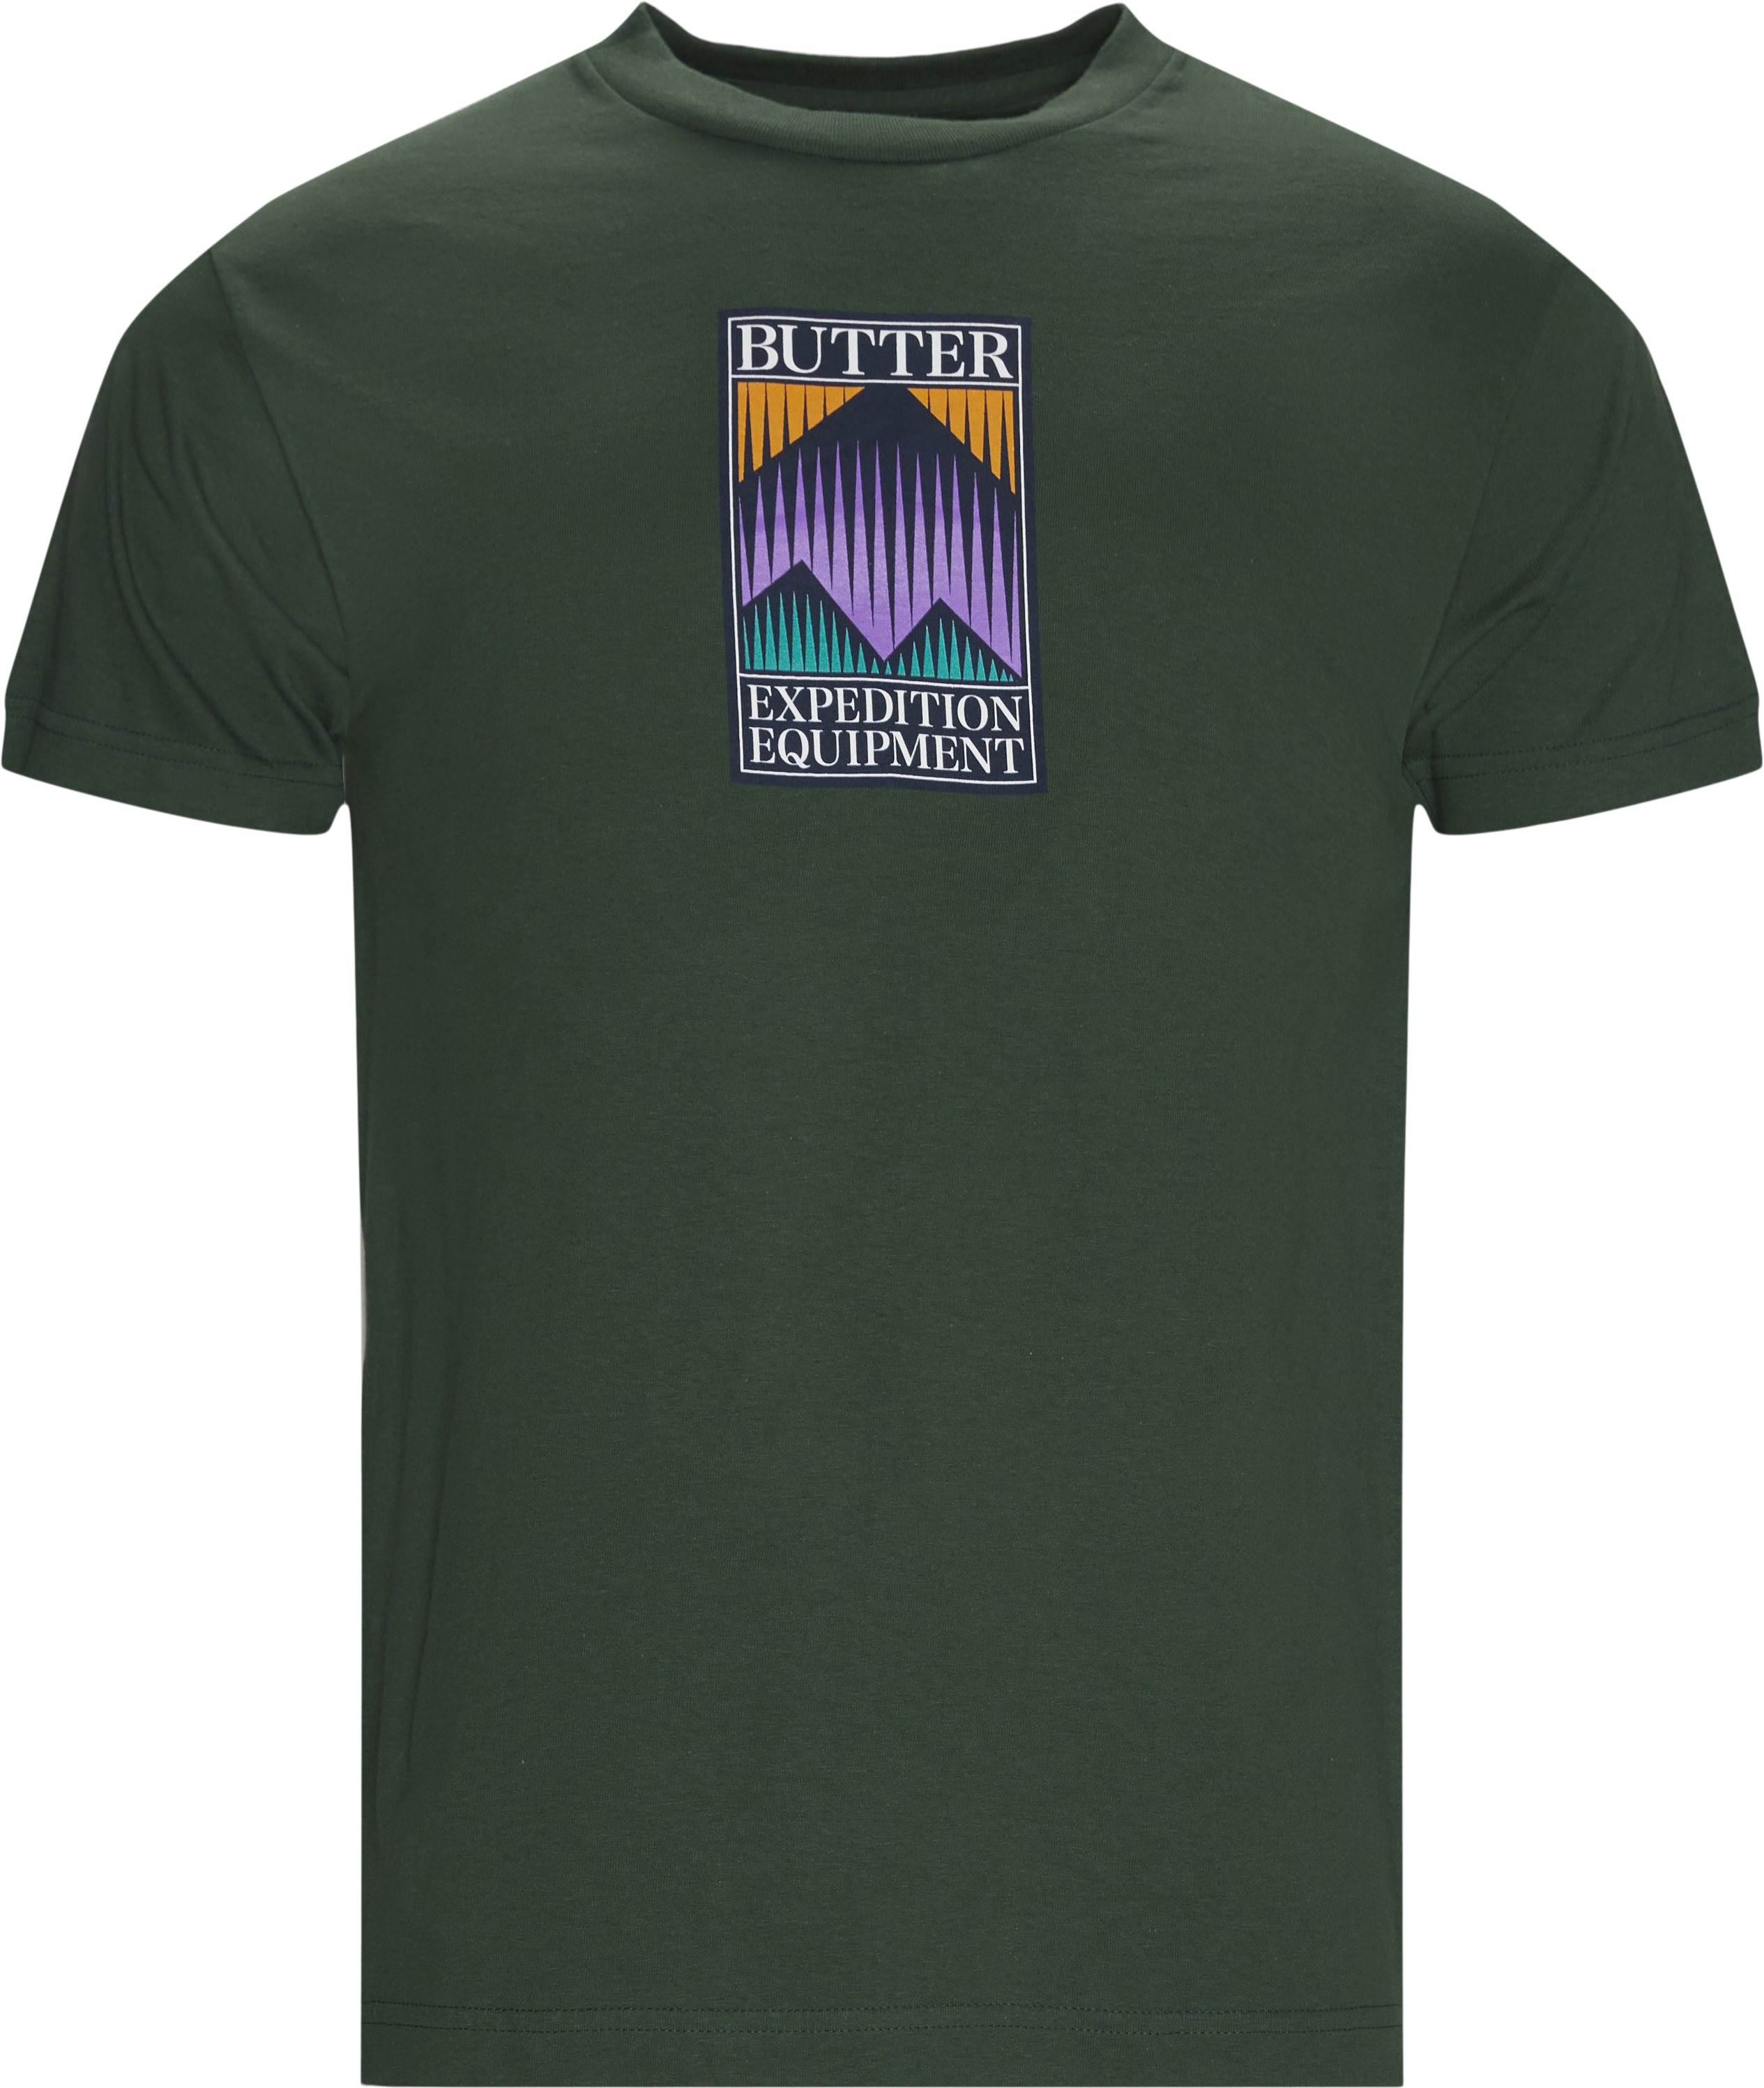 Expedition Tee - T-shirts - Regular fit - Grøn